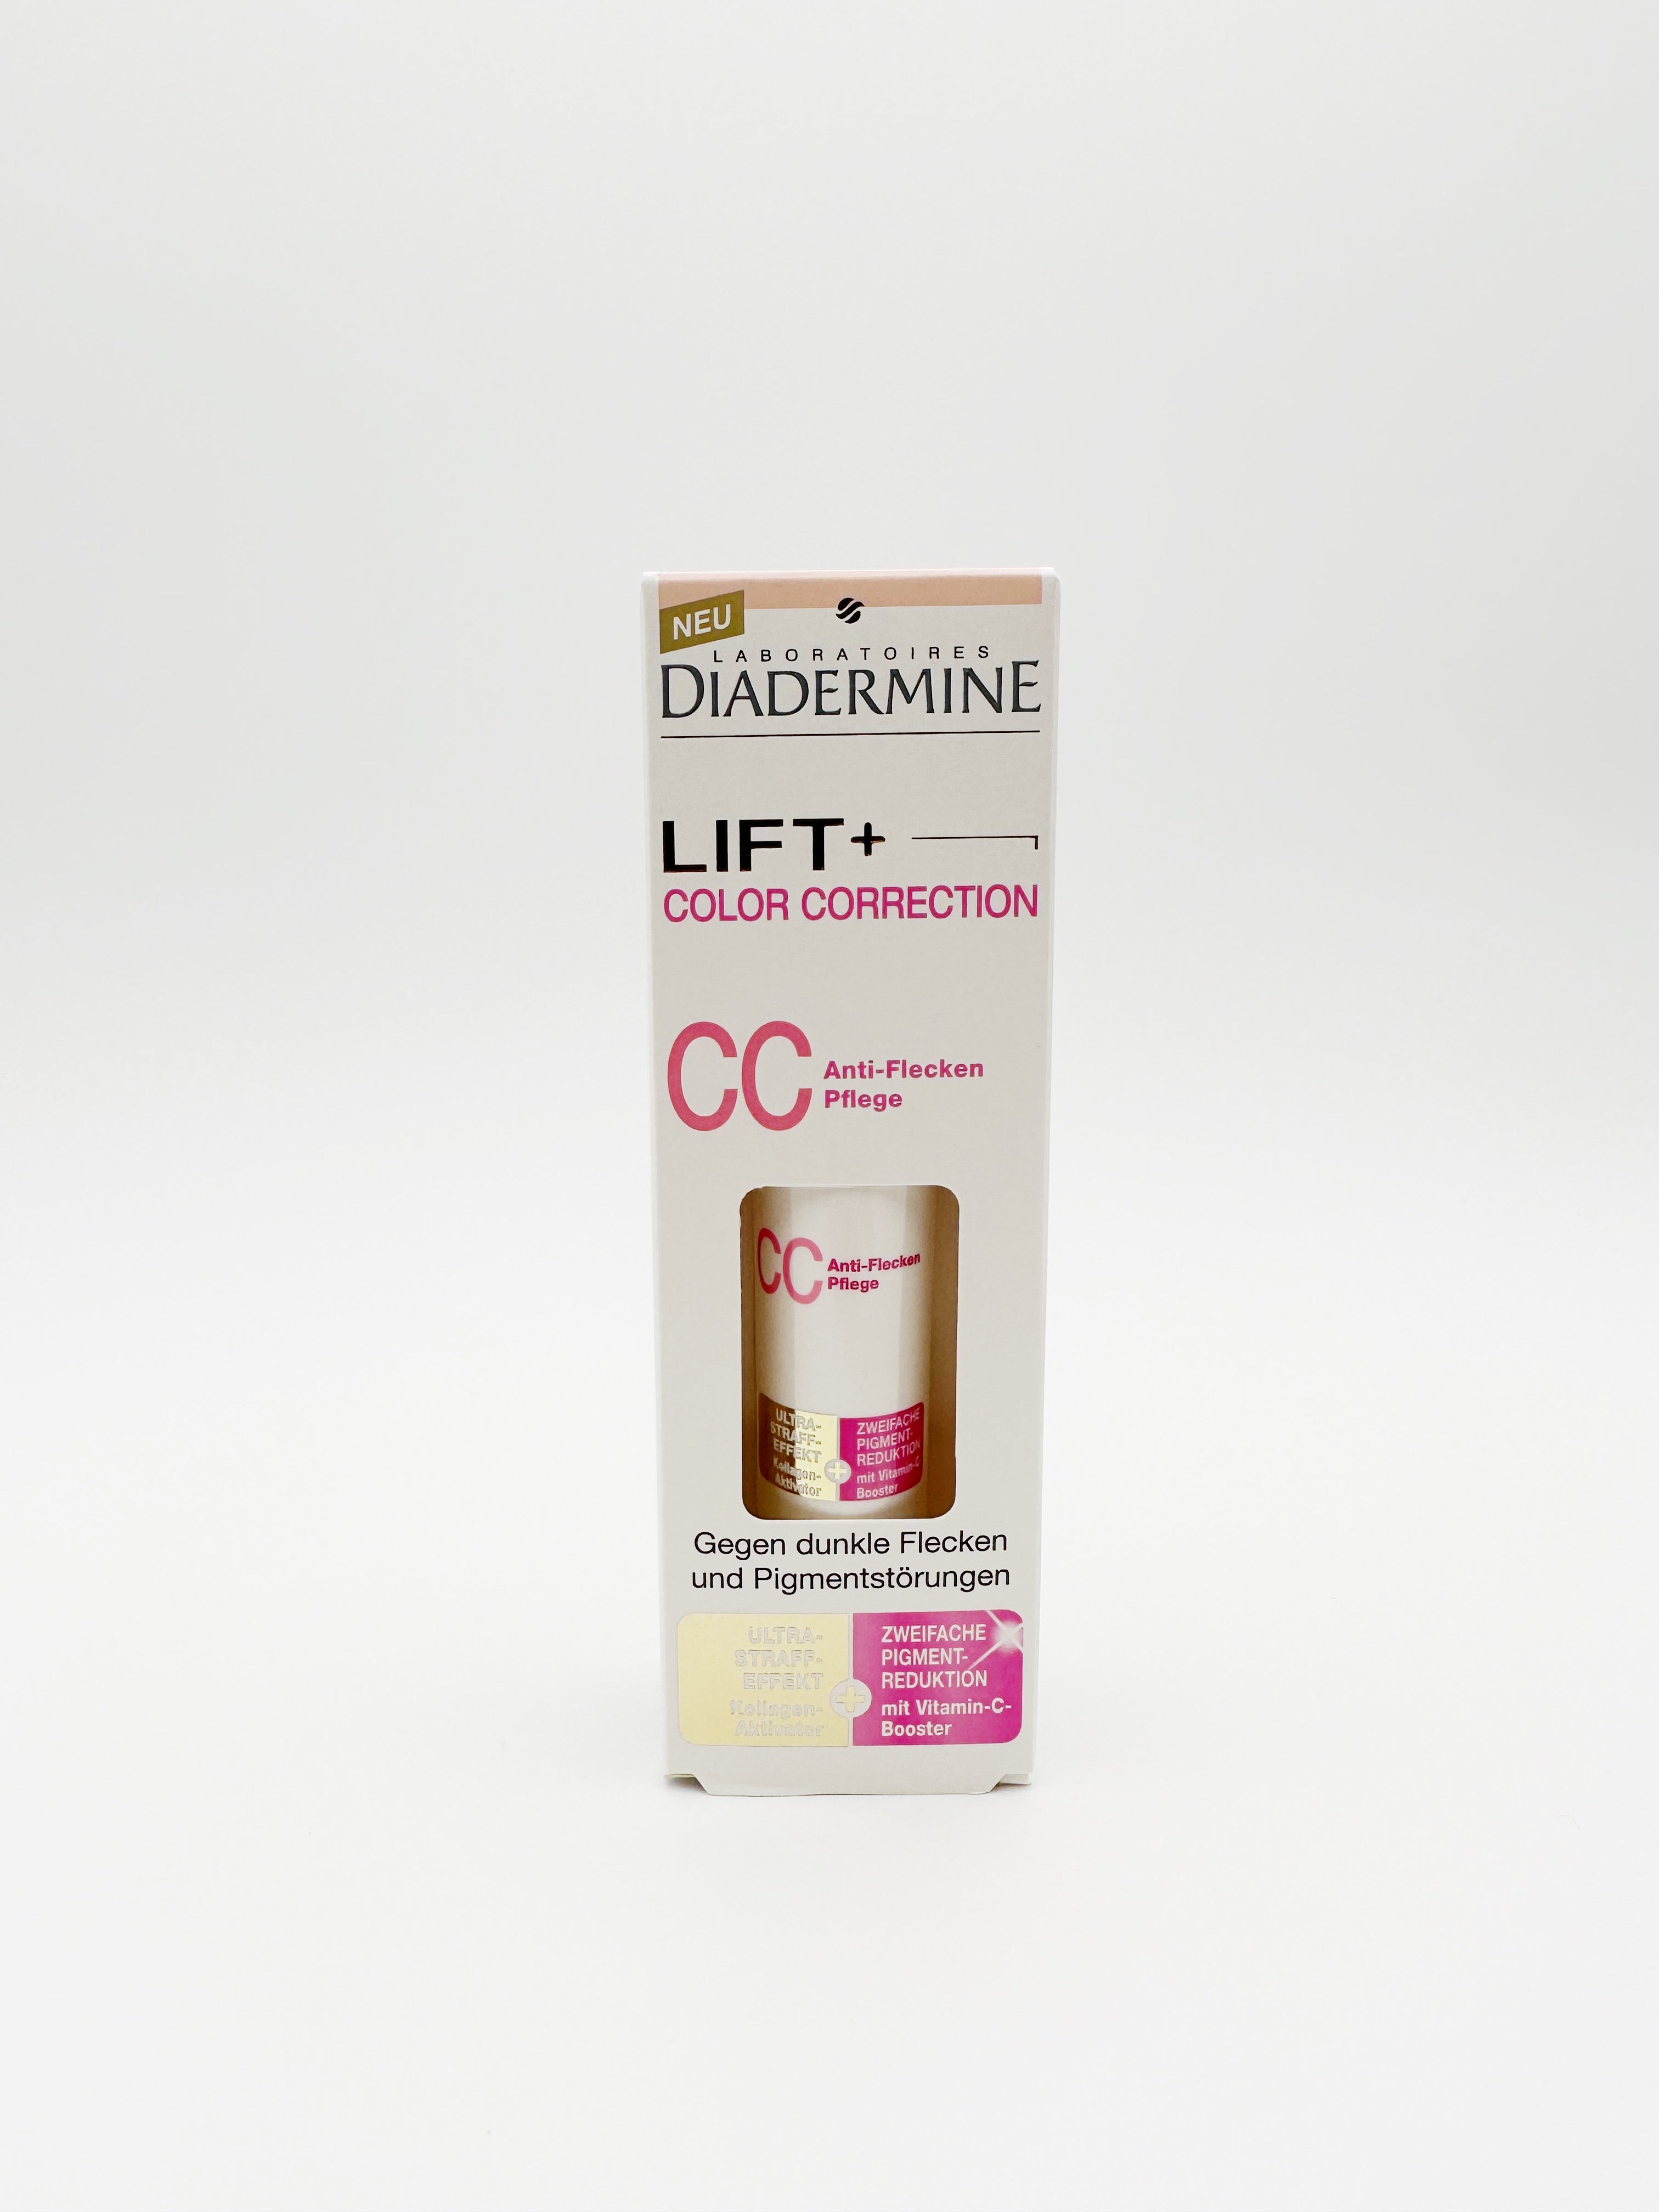 Diadermine Lift+ CC Anti-Flecken-Pflege 50ml